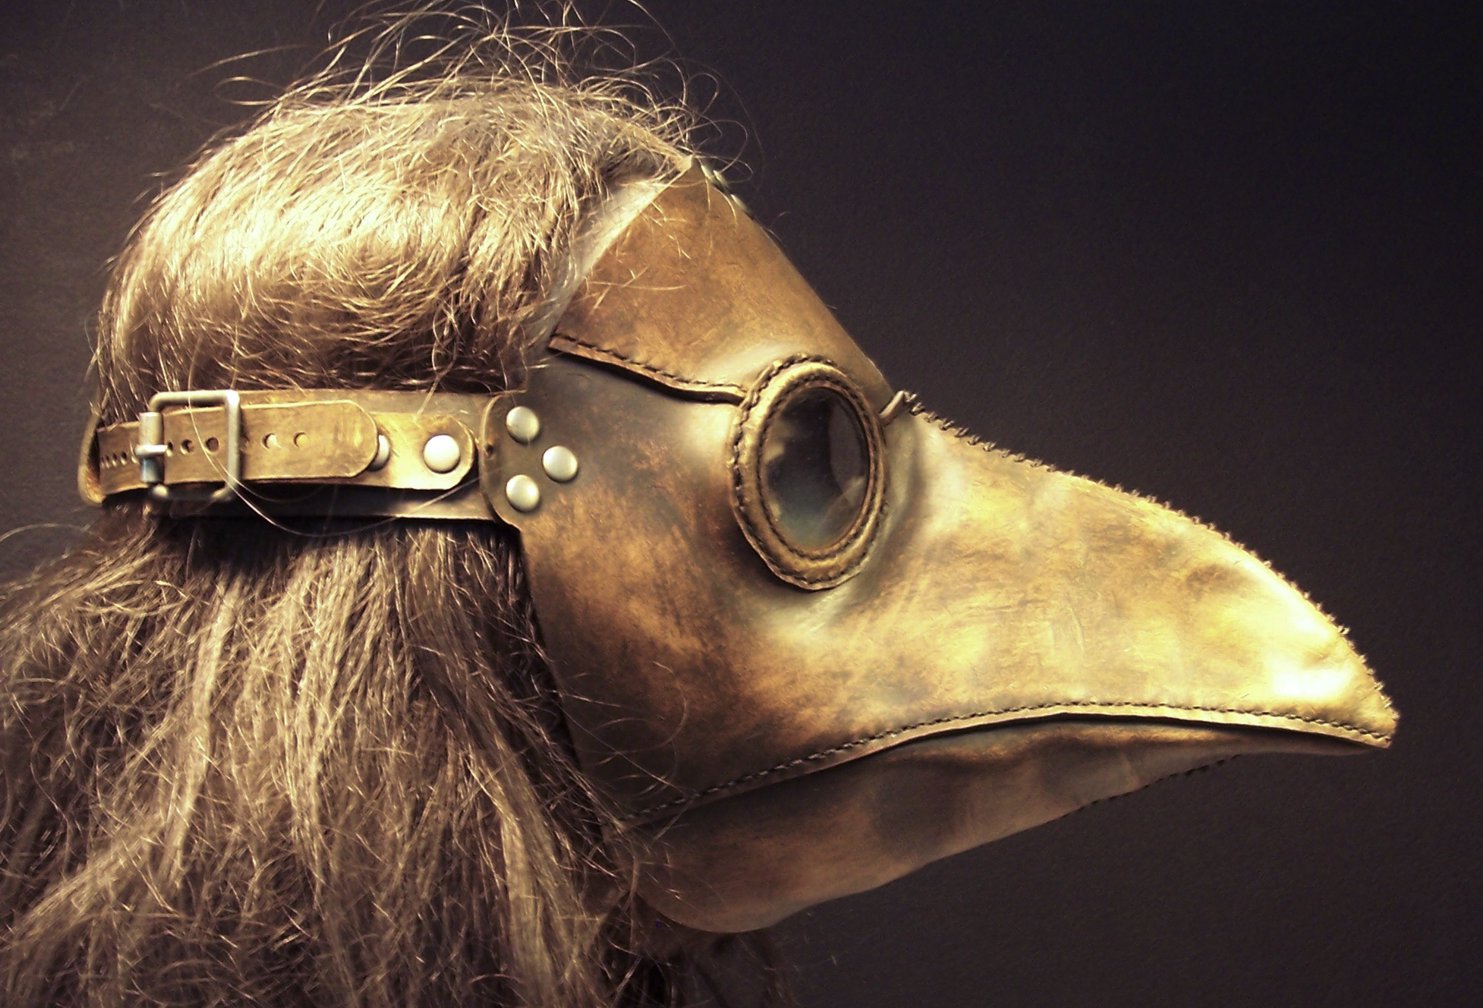 Plague Doctor Mask For Sale Ebay